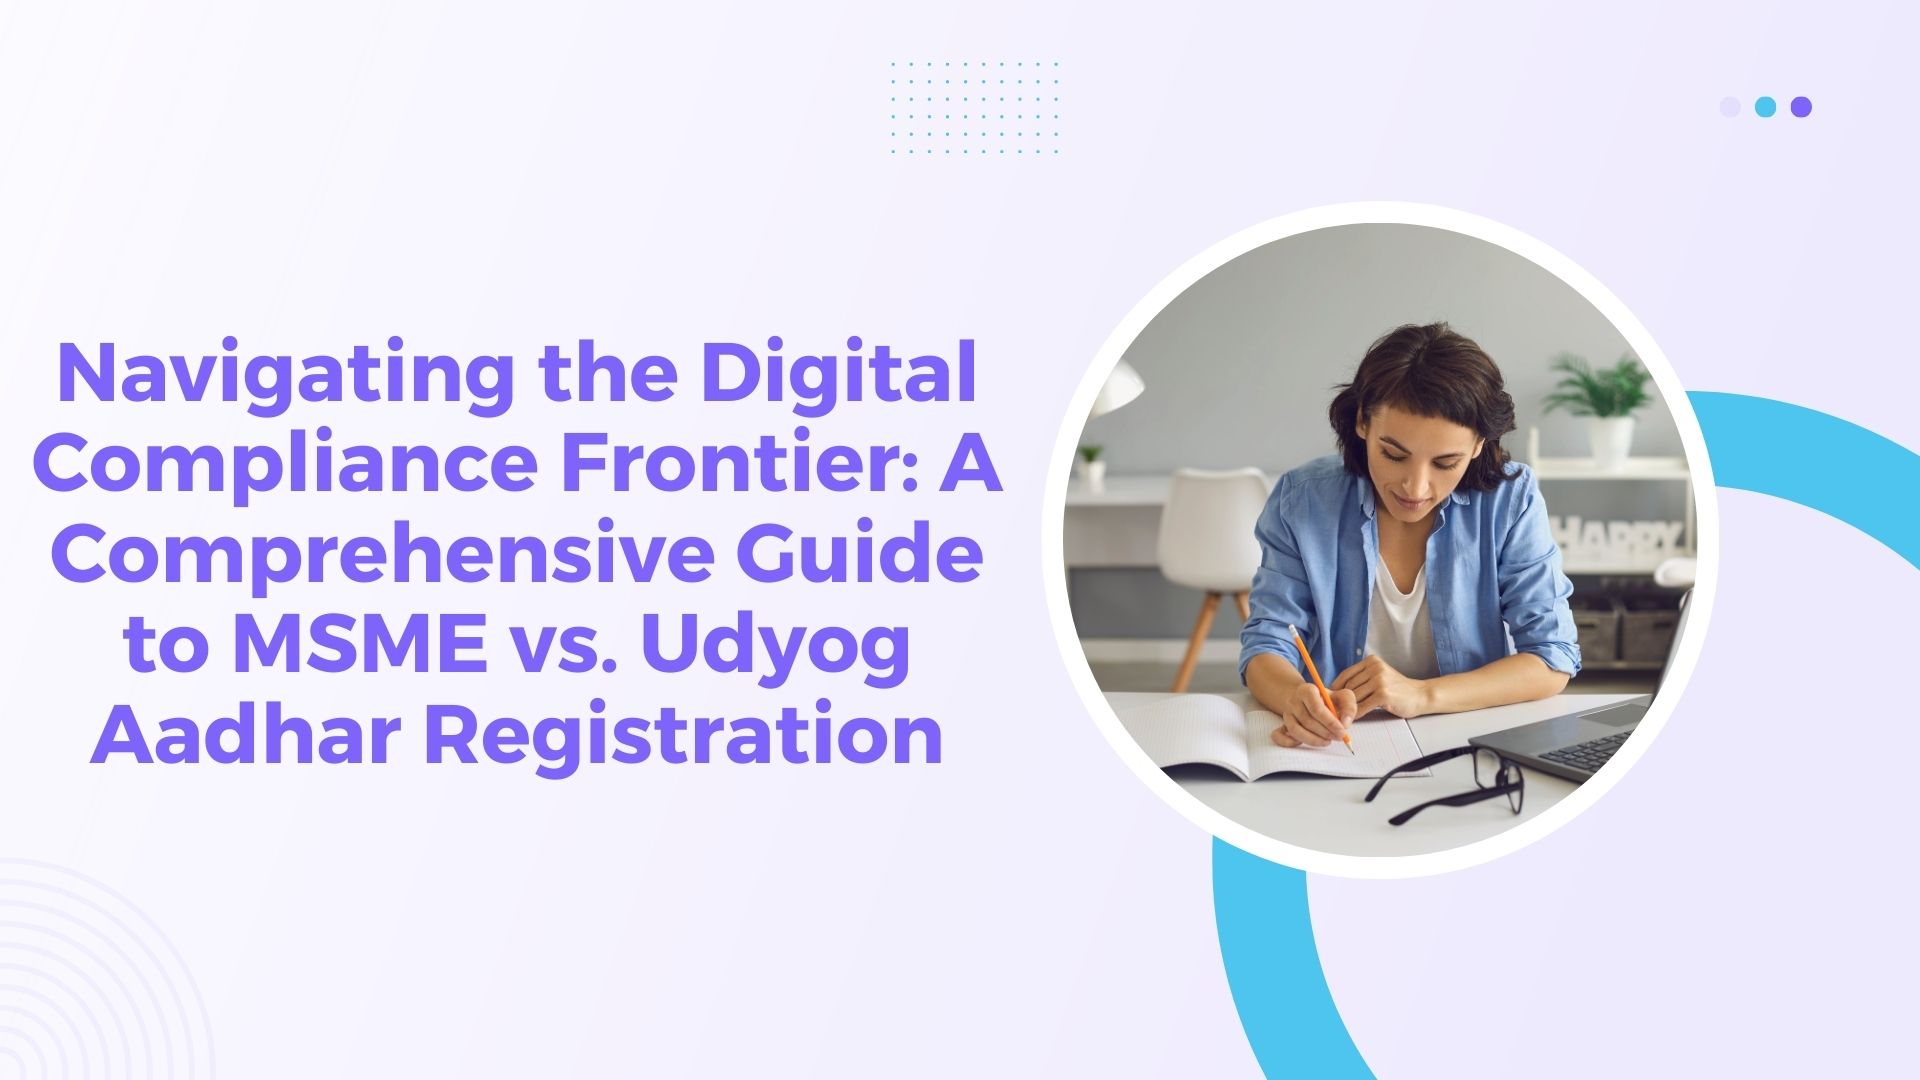 Navigating the Digital Compliance Frontier: A Comprehensive Guide to MSME vs. Udyog Aadhar Registration